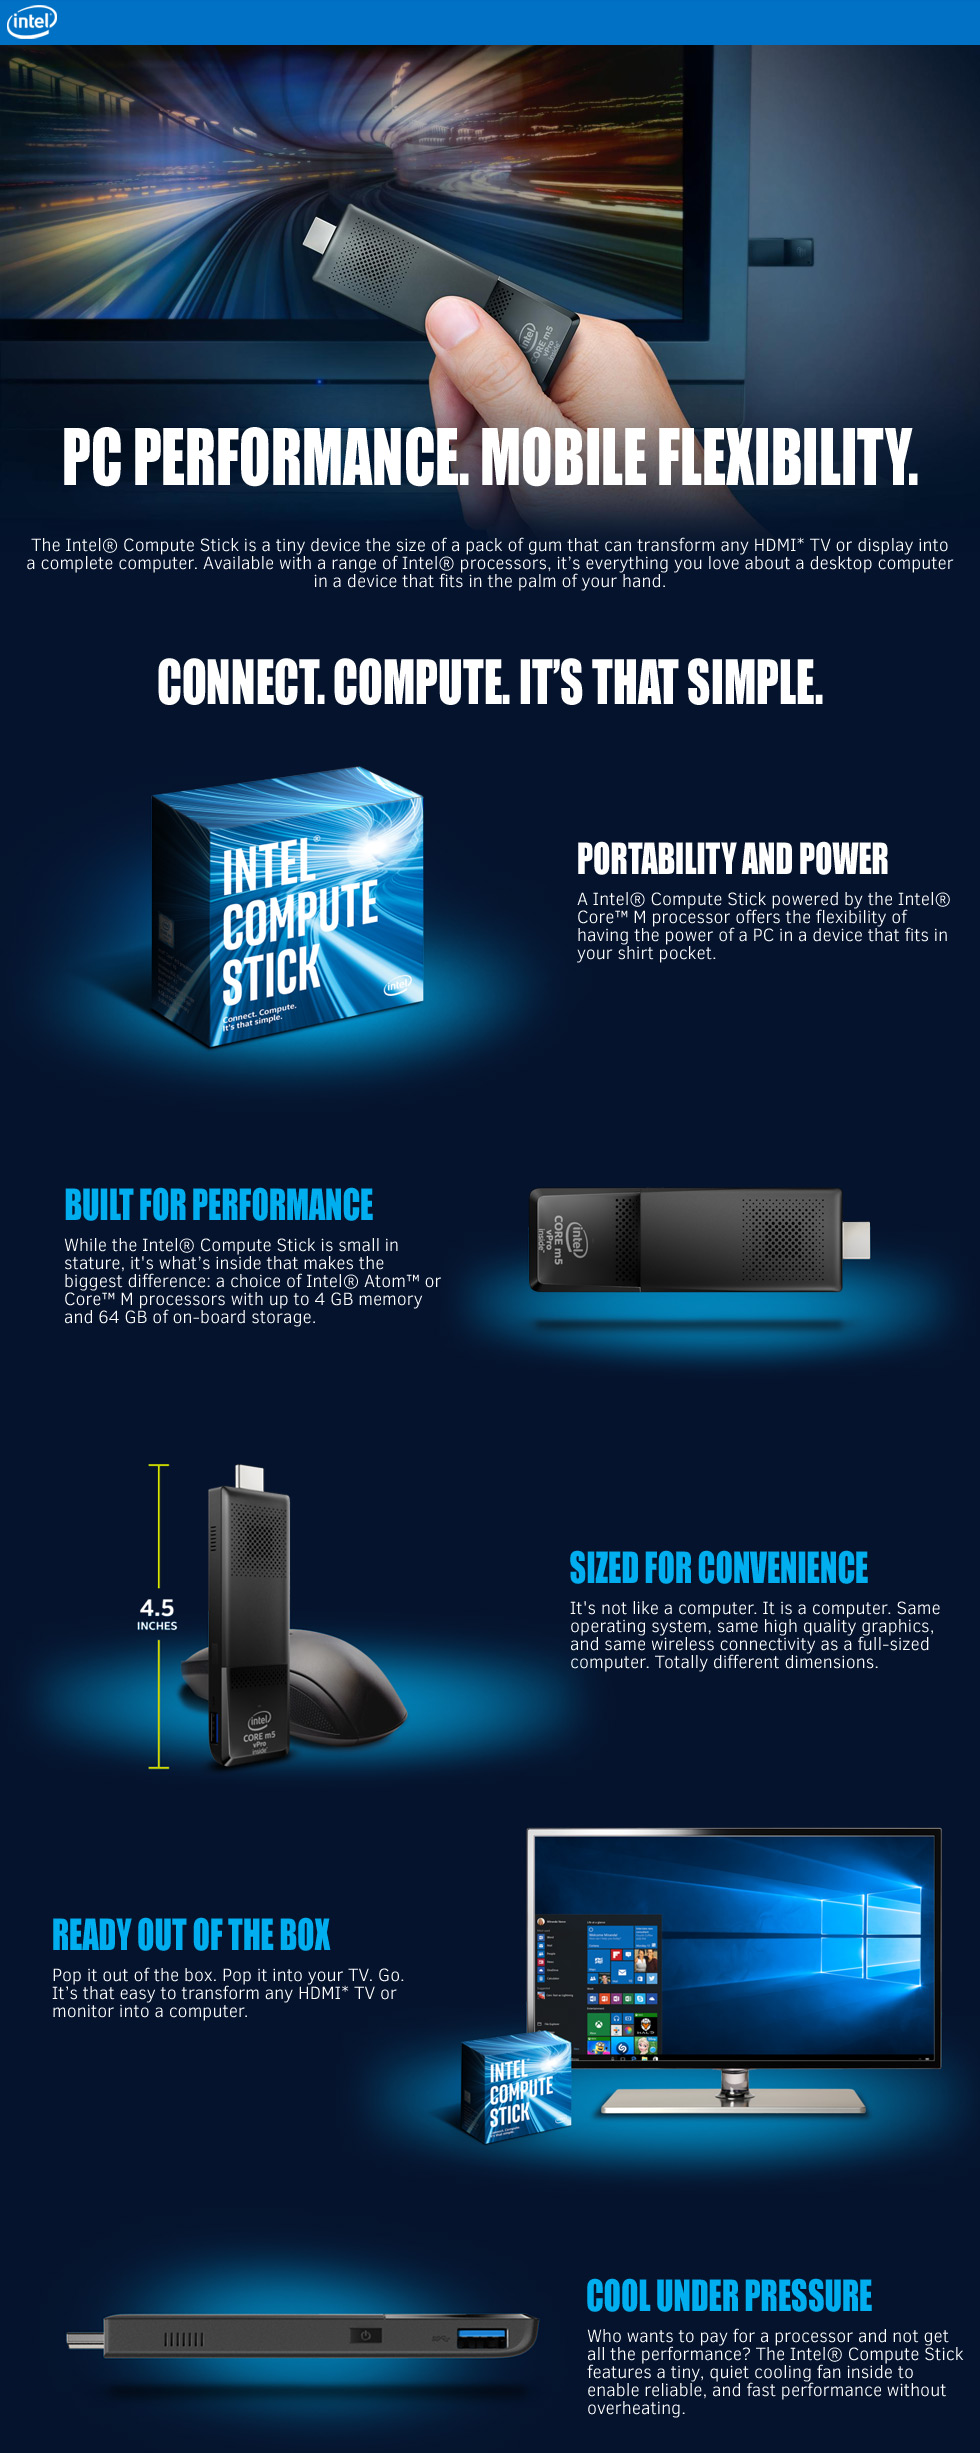 Intel Compute Stick Benefits